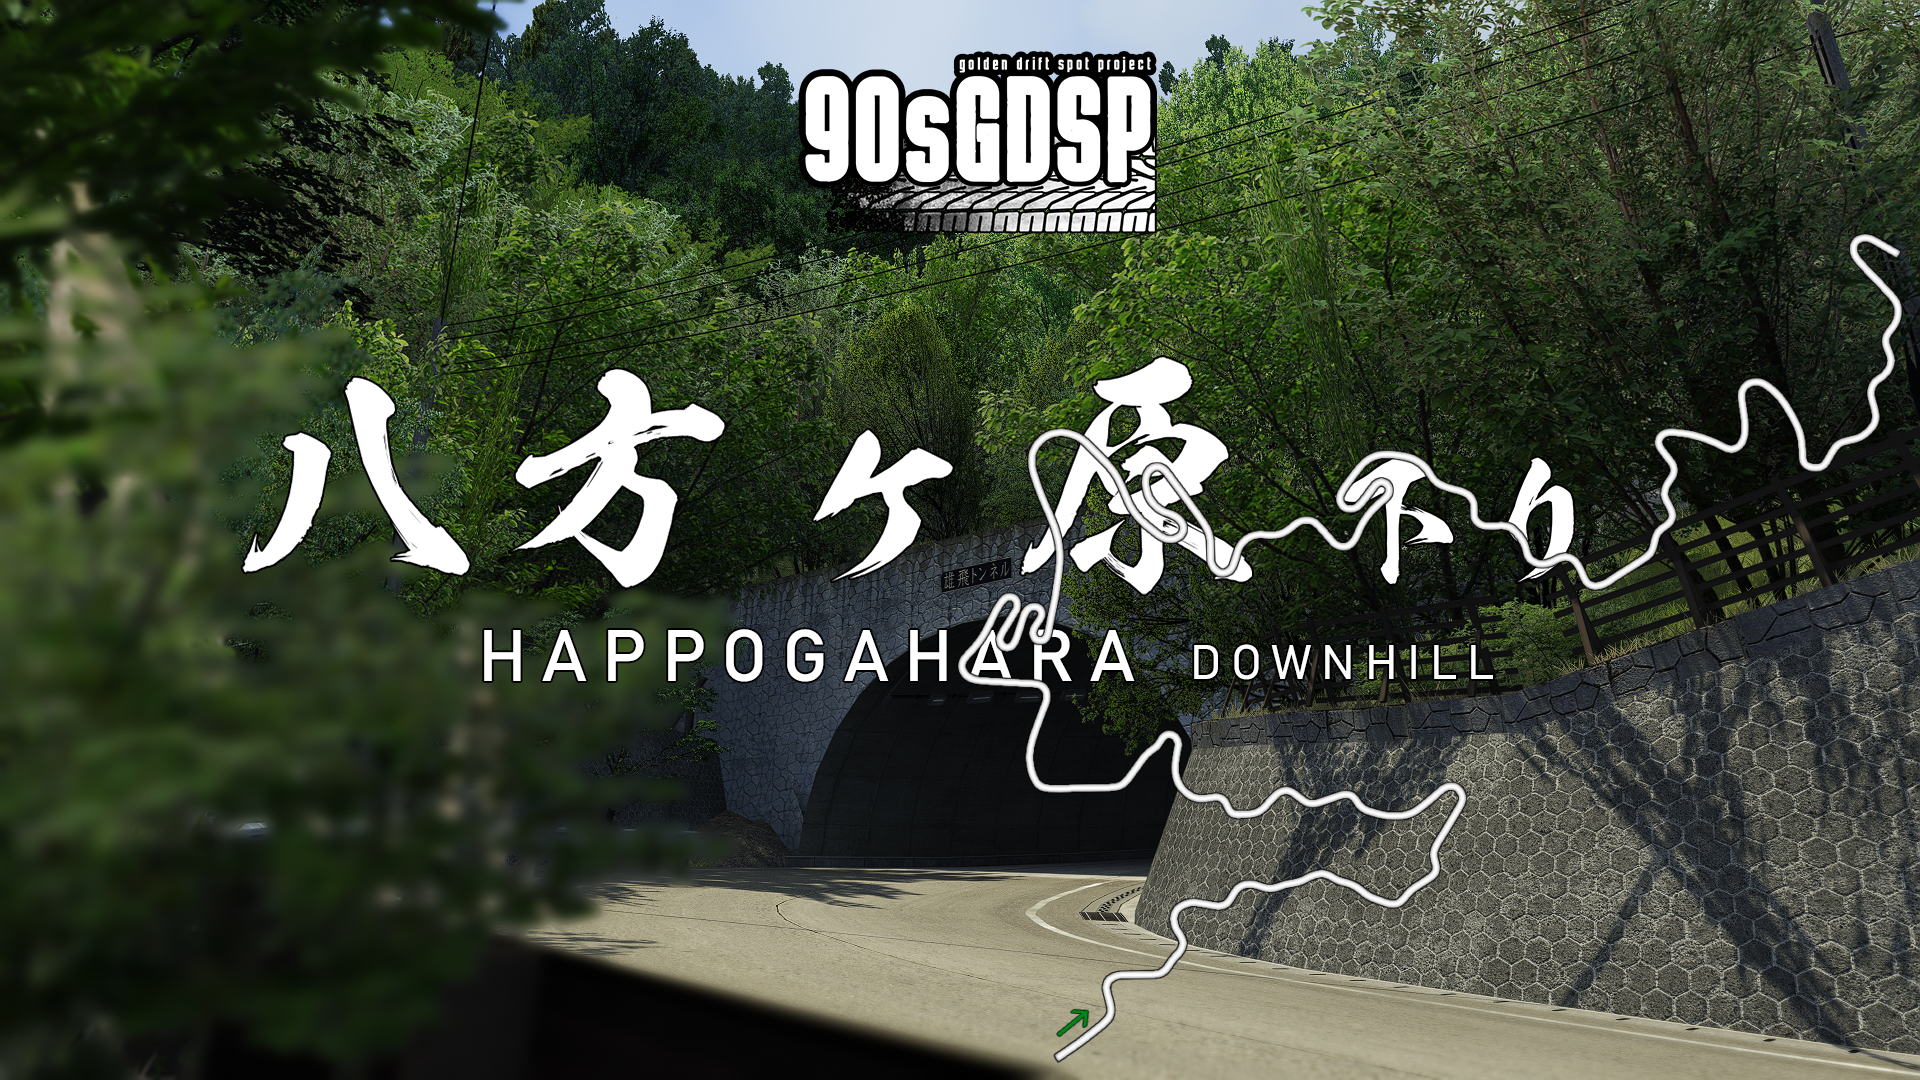 HAPPOGAHARA, layout downhill